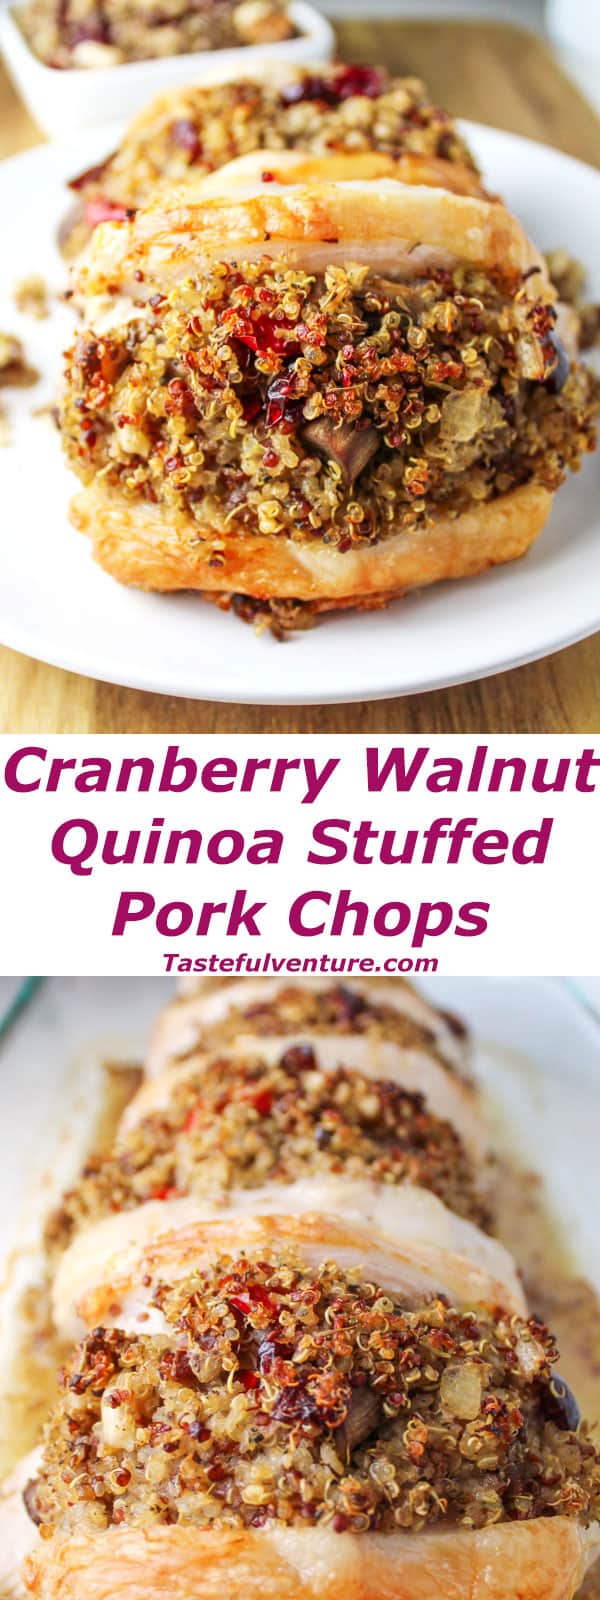 Cranberry Walnut Quinoa Stuffed Pork Chops